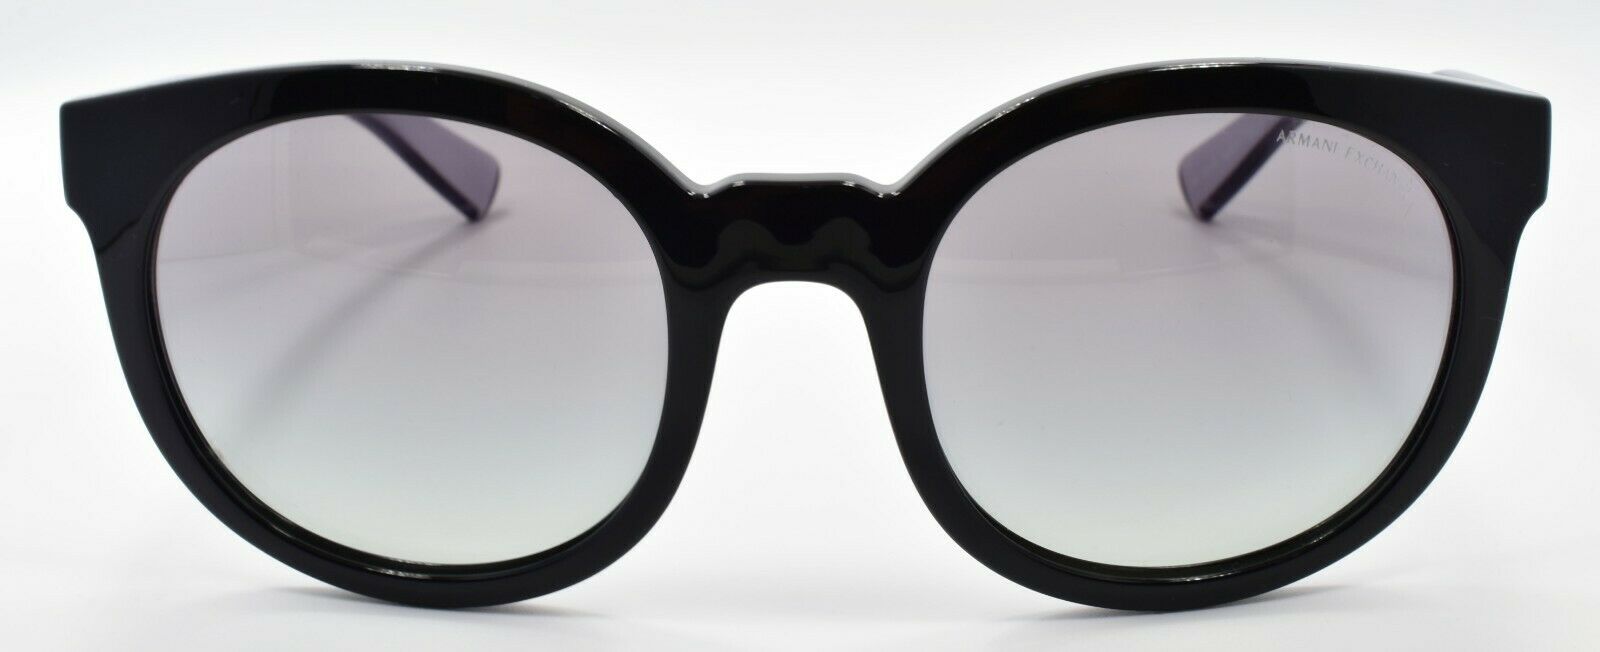 2-Armani Exchange AX4057S 820711 Women's Round Sunglasses Black / Grey Gradient-8053672627565-IKSpecs